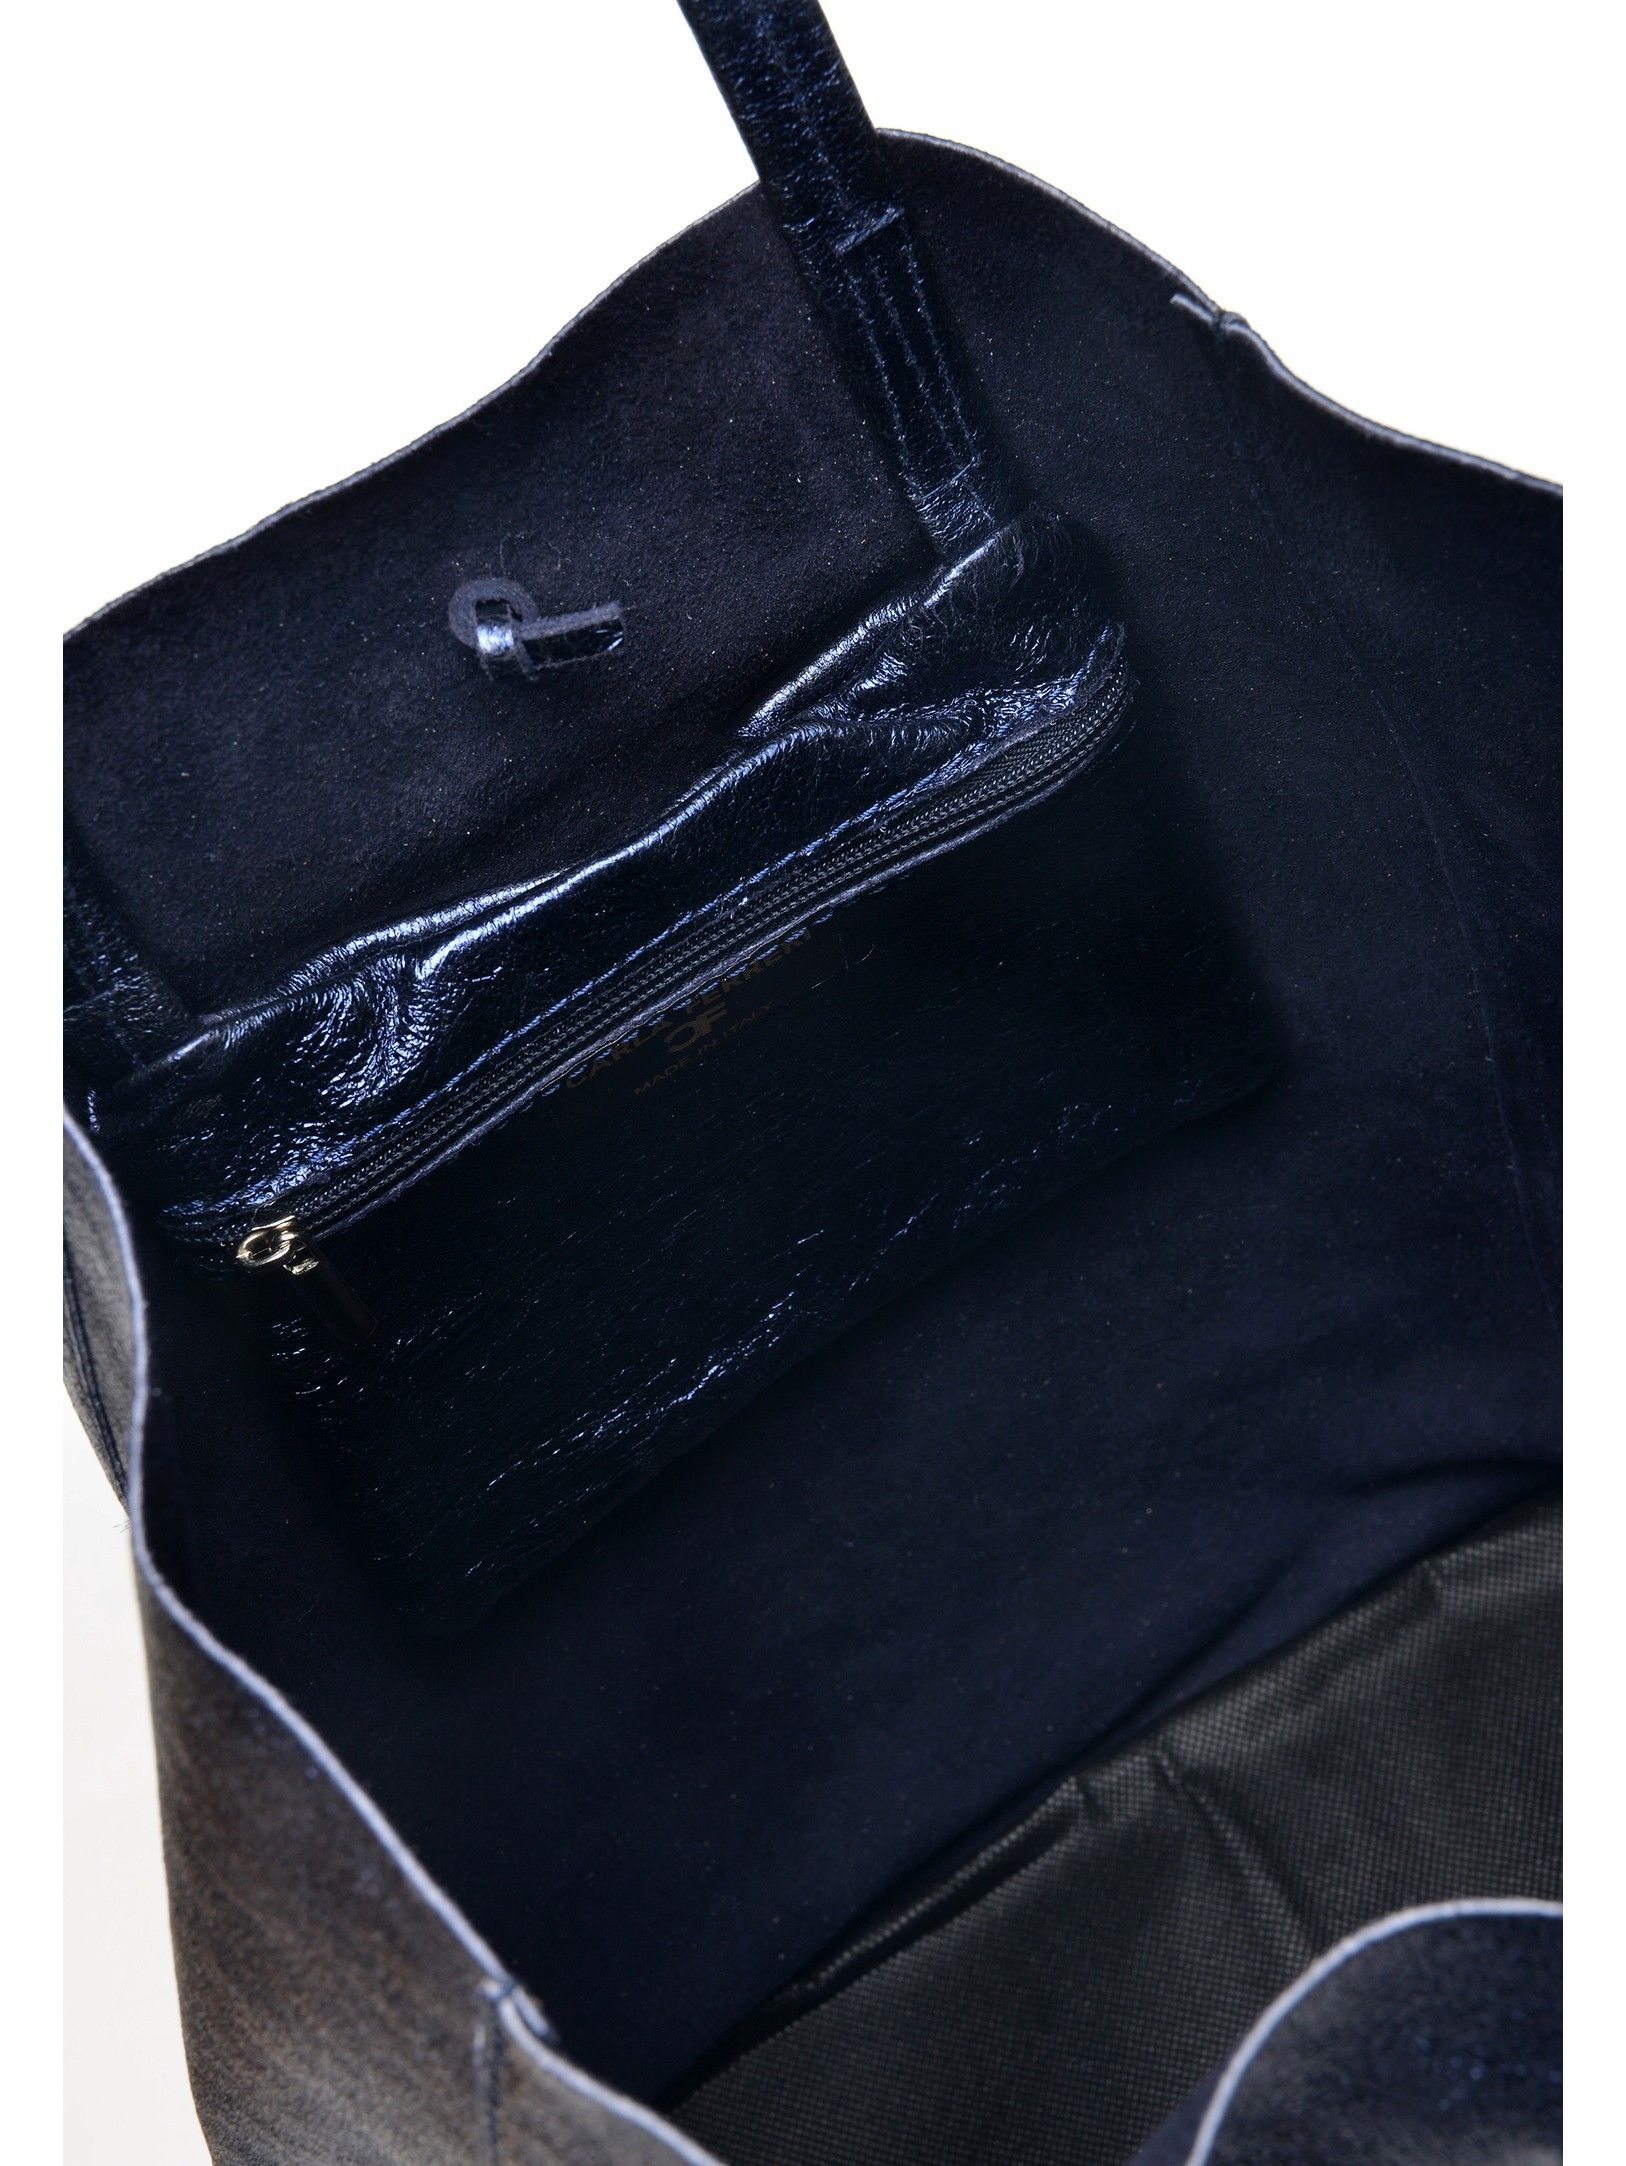 Shopper Bag
100% cow leather
Two top handles
Interior pocket
Dimensions(L): 37x41x12 cm